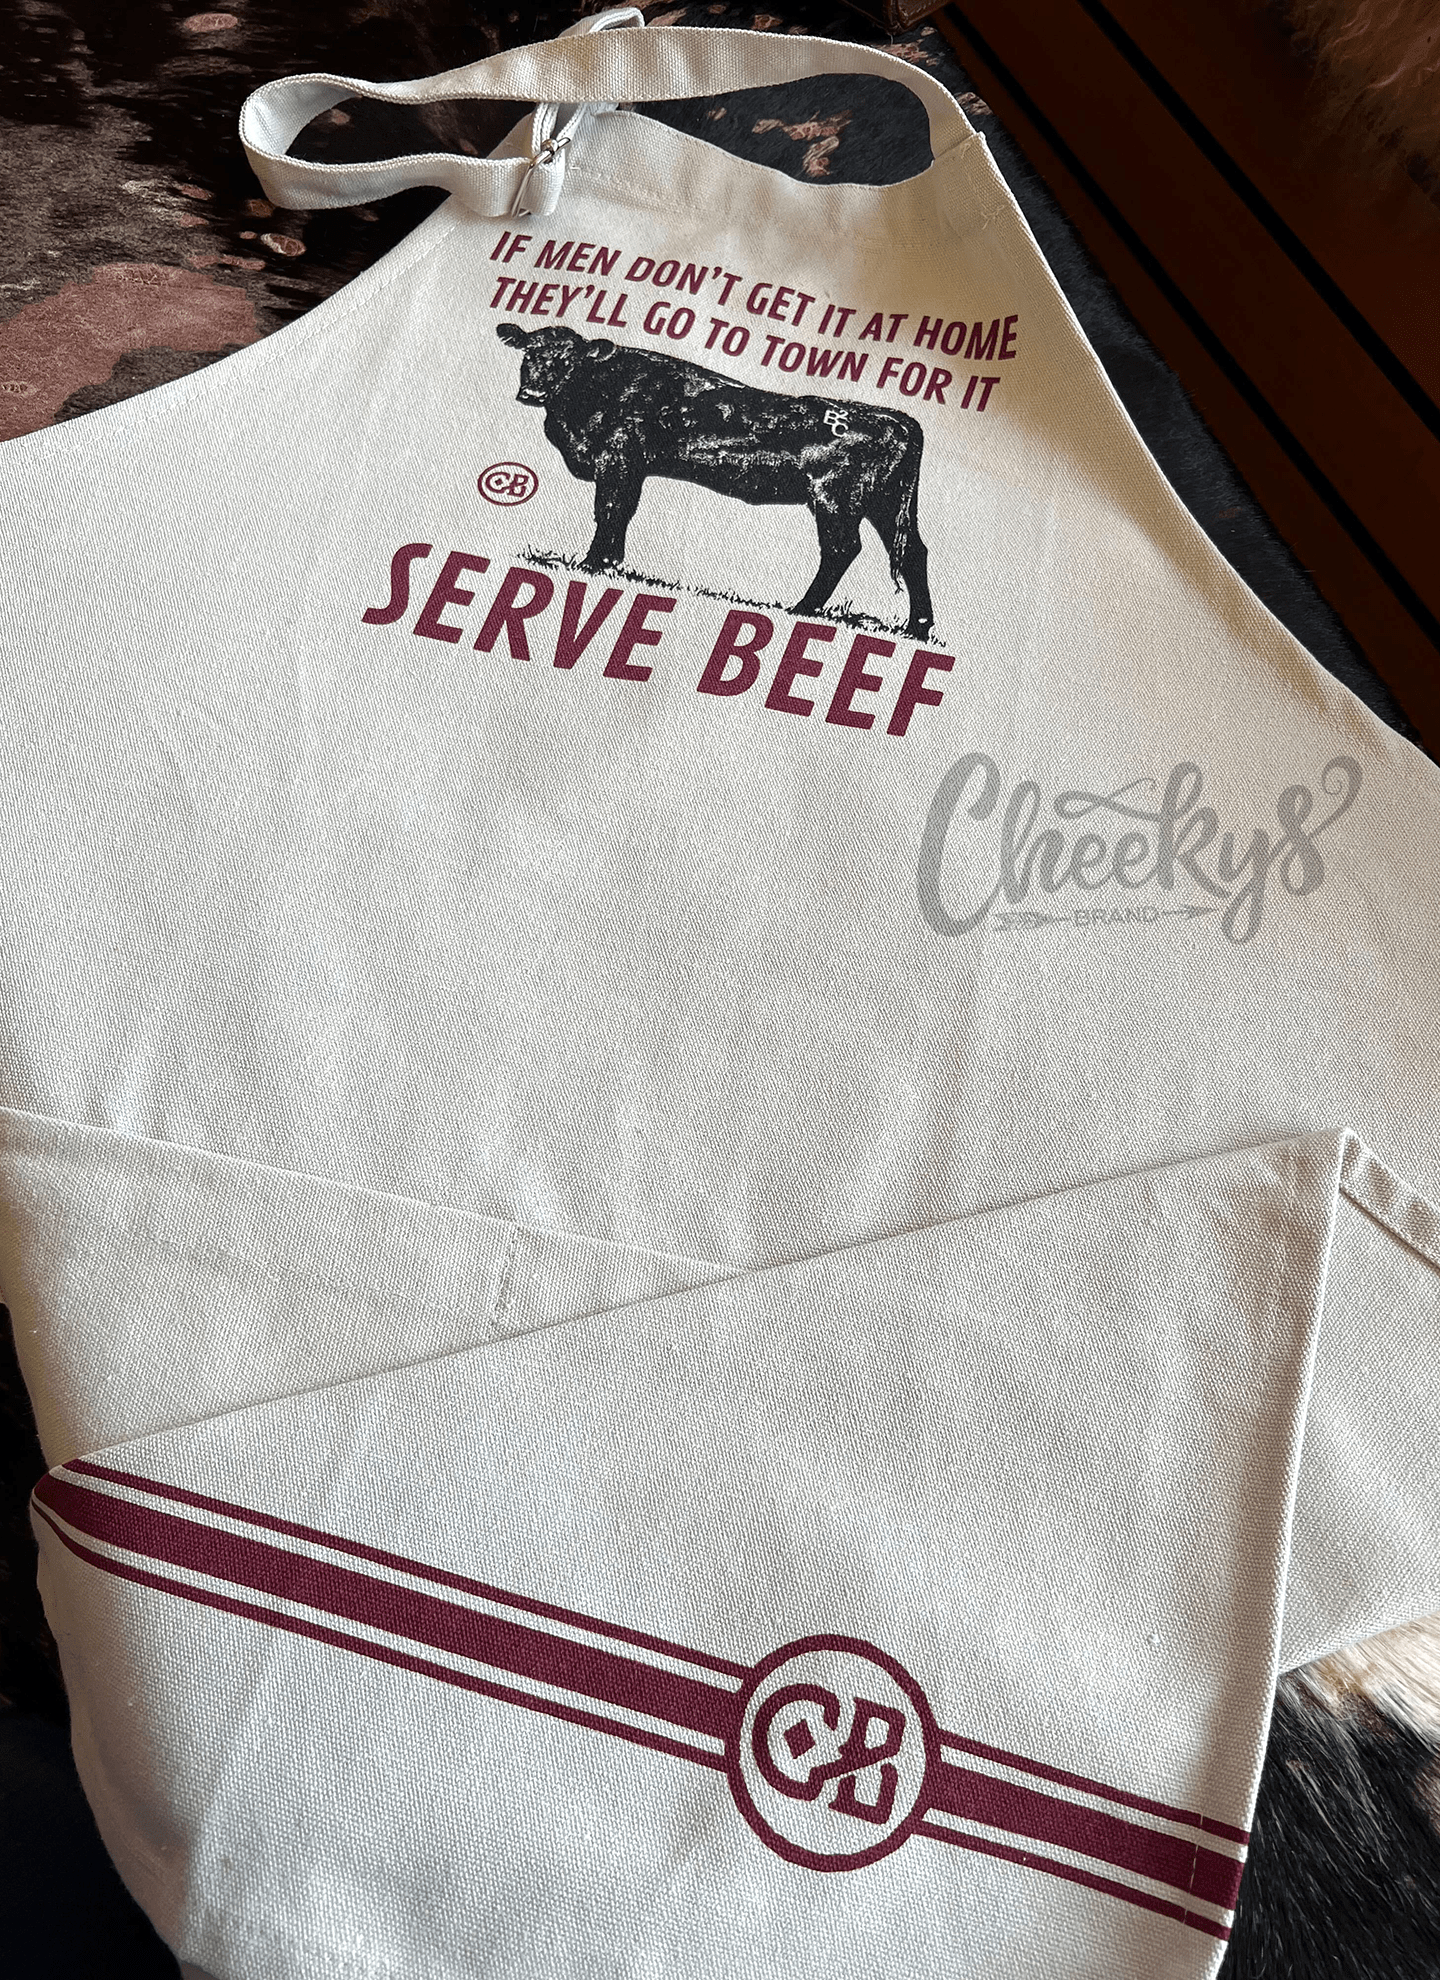 Serve Beef Apron on Ivory Cheekys Brand 